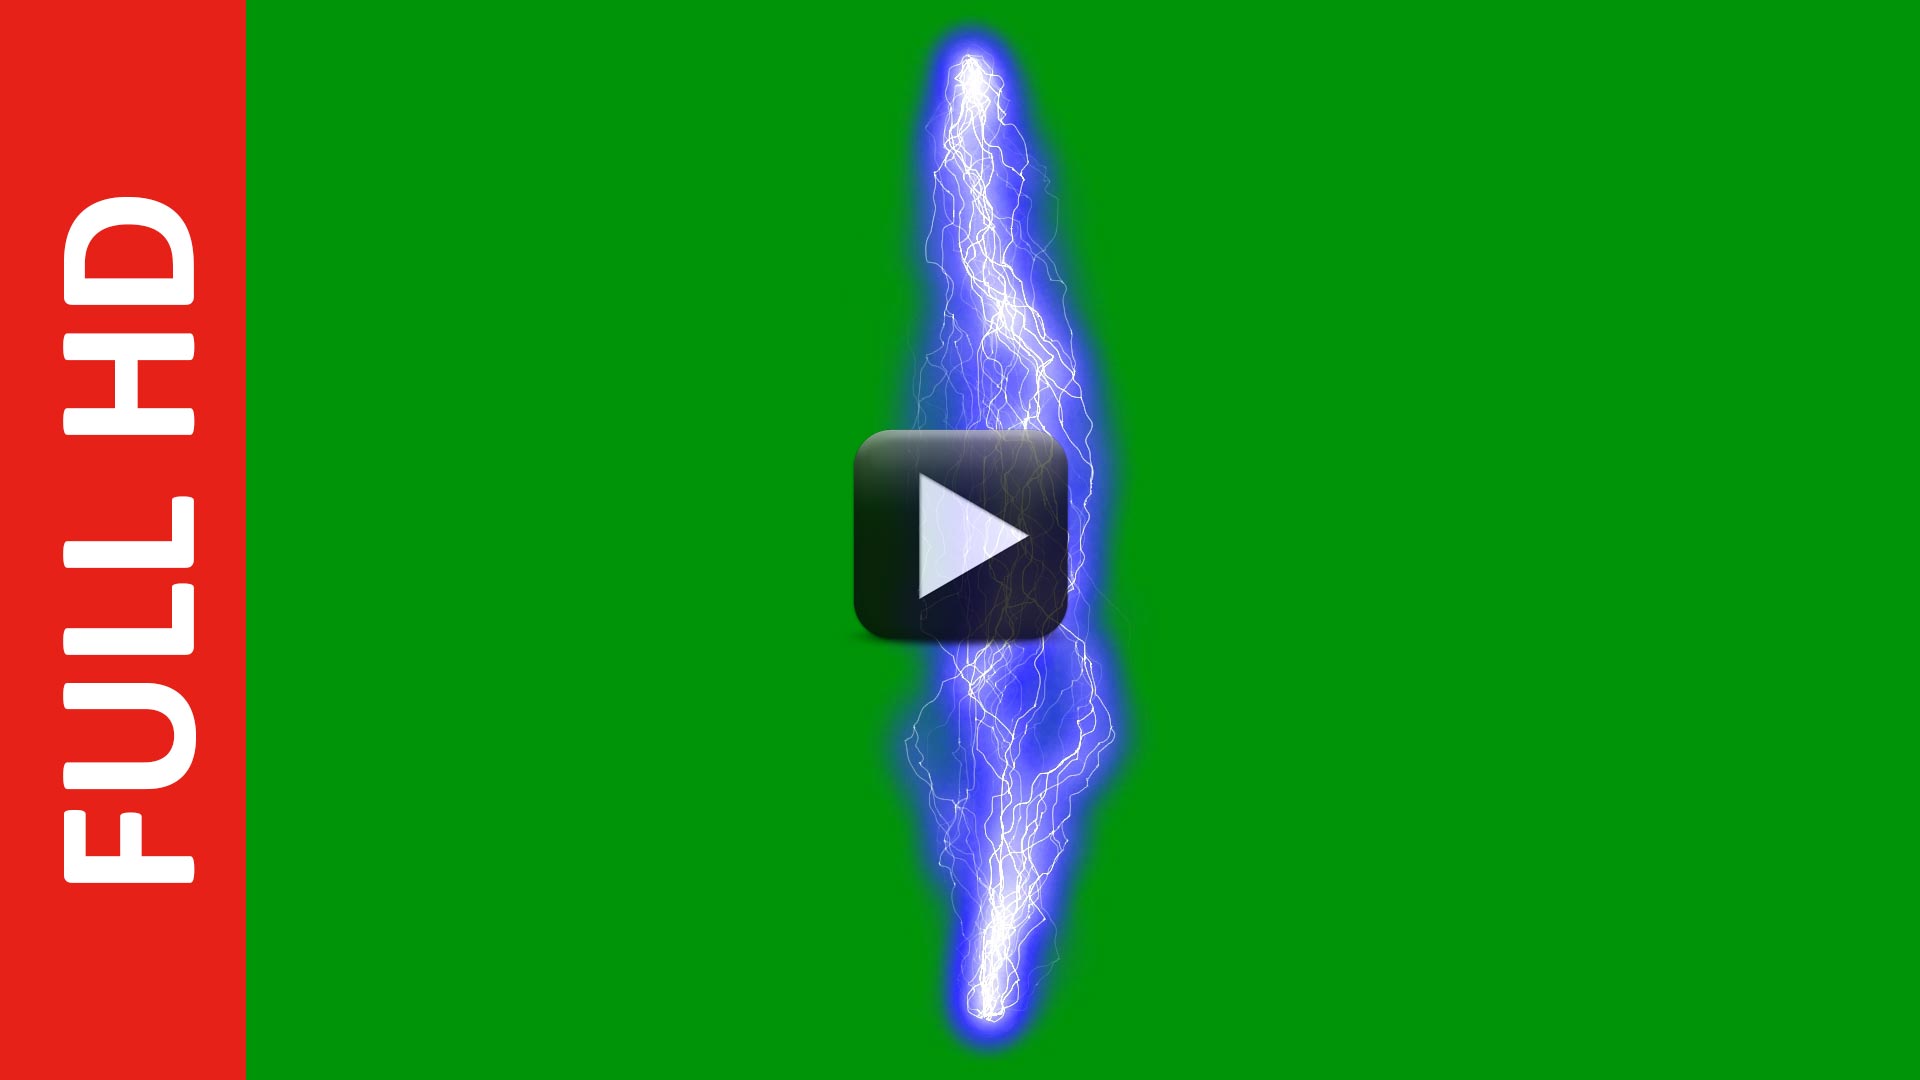 Animated Lightning Strike - Green Screen Effect | All Design Creative